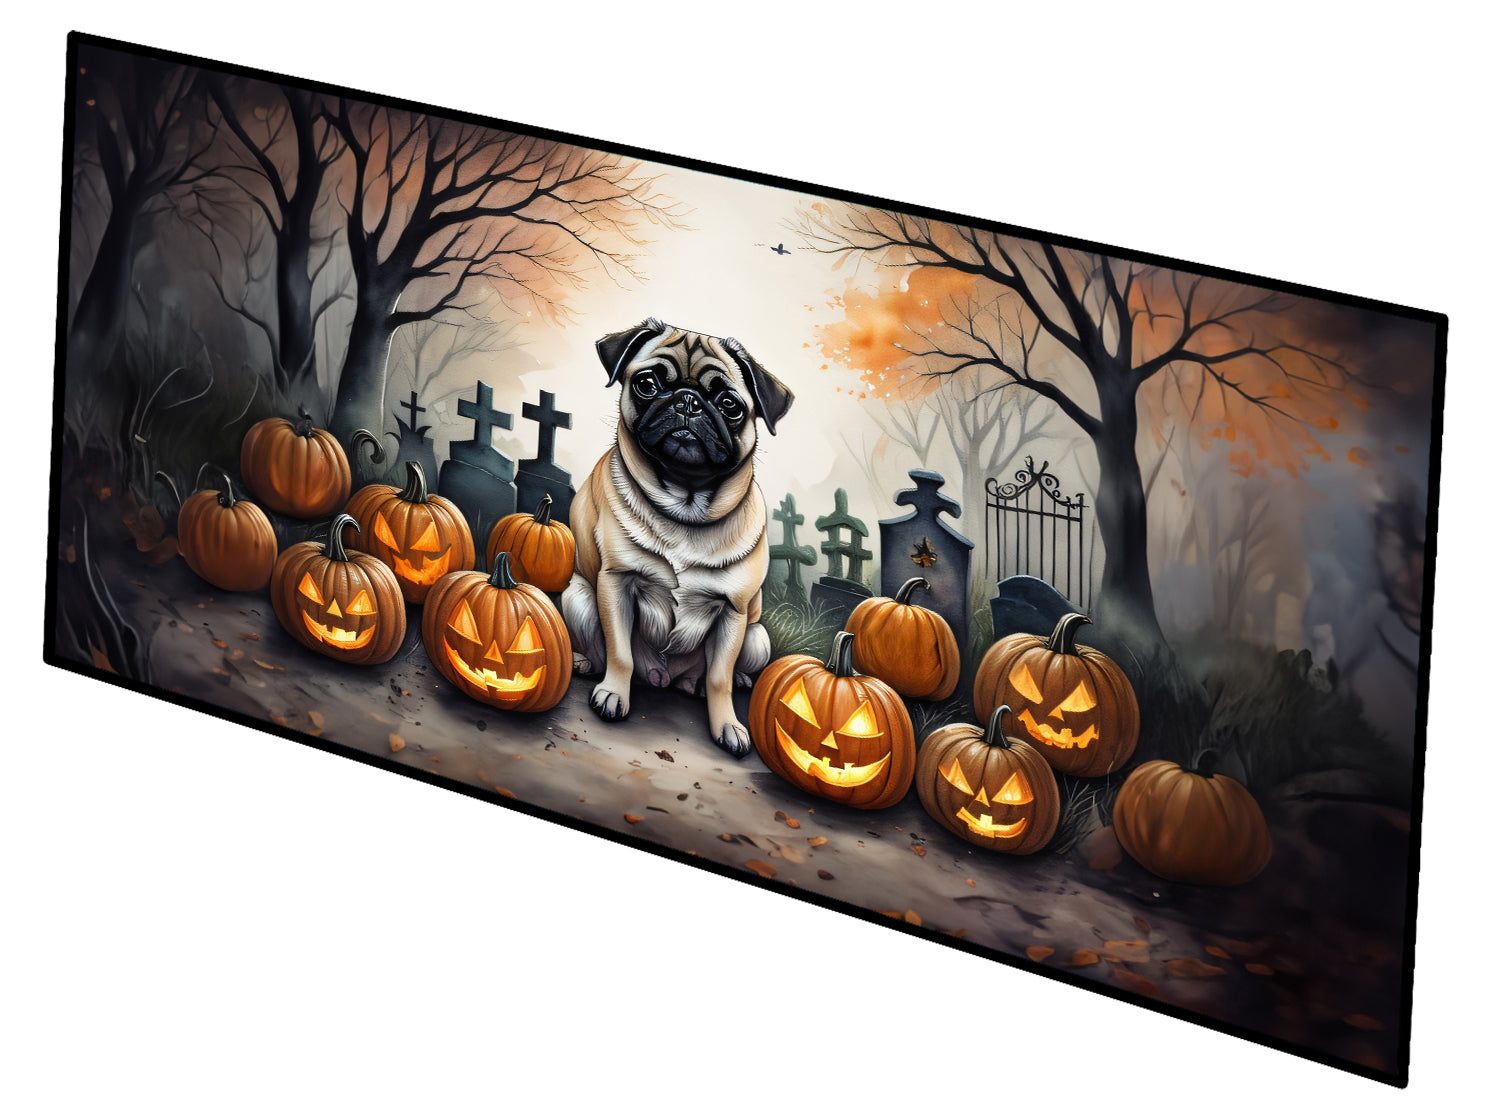 Buy this Fawn Pug Spooky Halloween Runner Mat 28x58